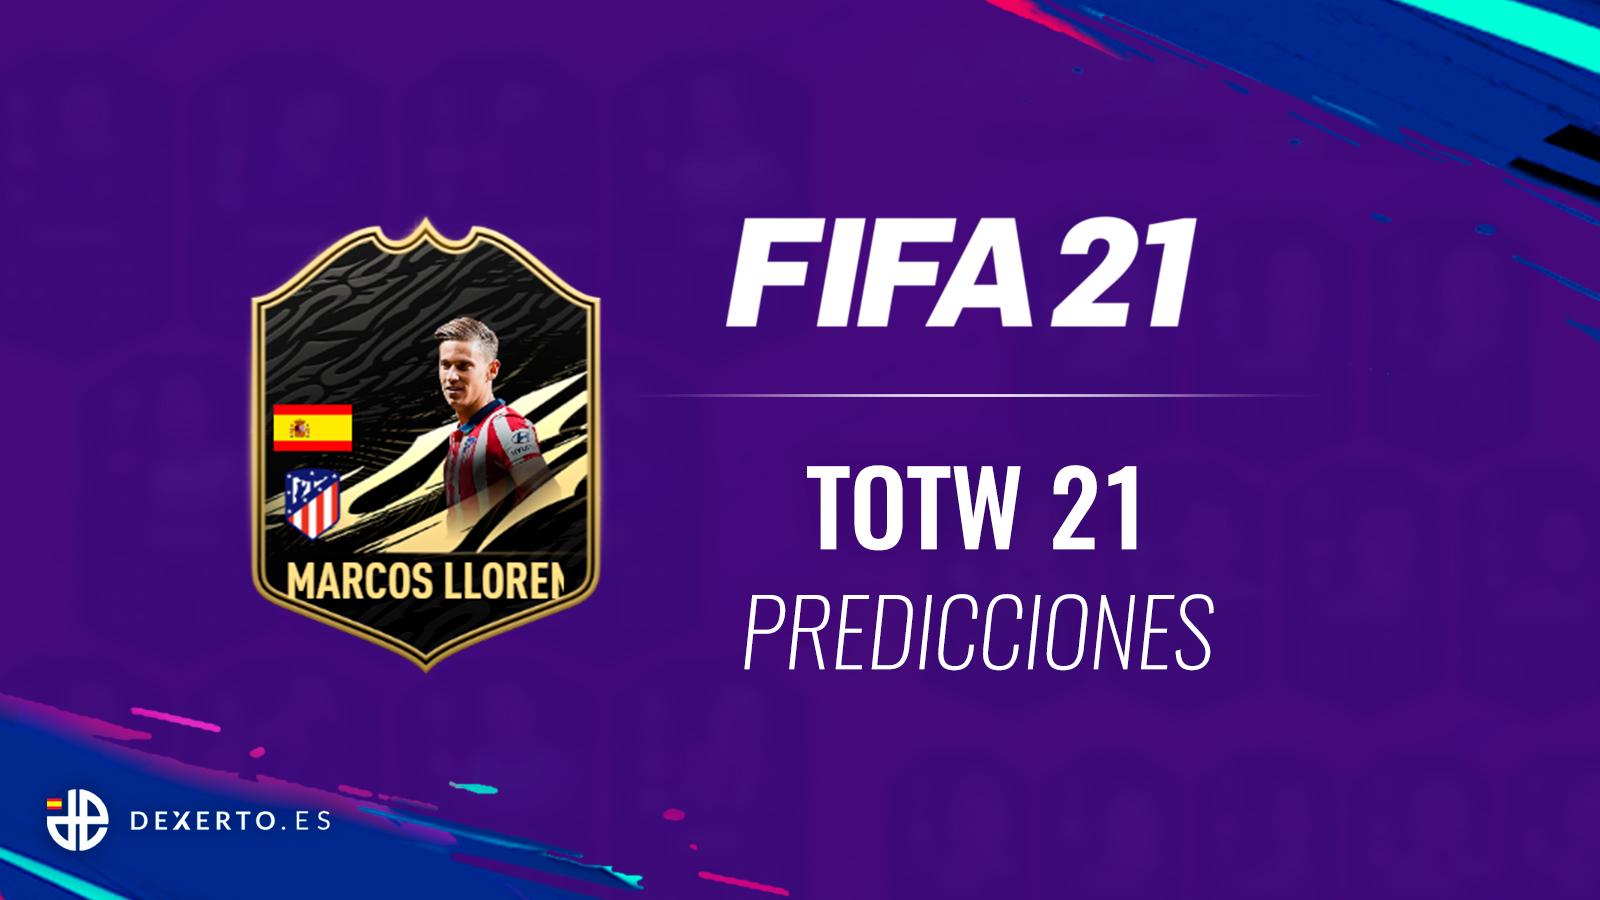 Marcos Llorente predicciones FIFA 21 TOTW